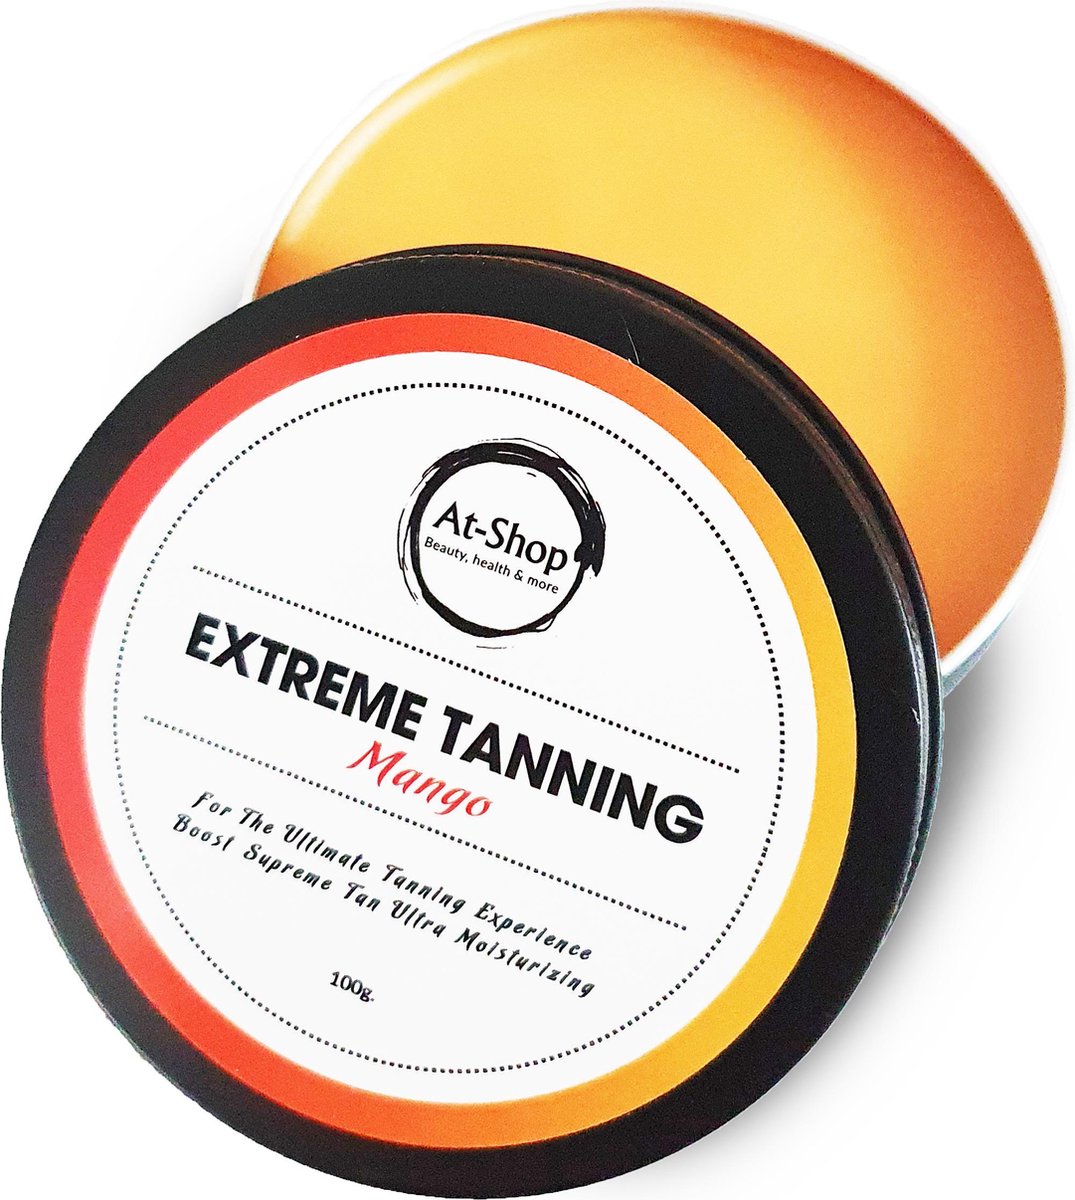 Extreme Tanning | Shine Brown | Tanning butter| Zonnestralen | Zonnebank | At-Shop | Sneller bruin | Zonnecreme | Zonnebrand| Mango